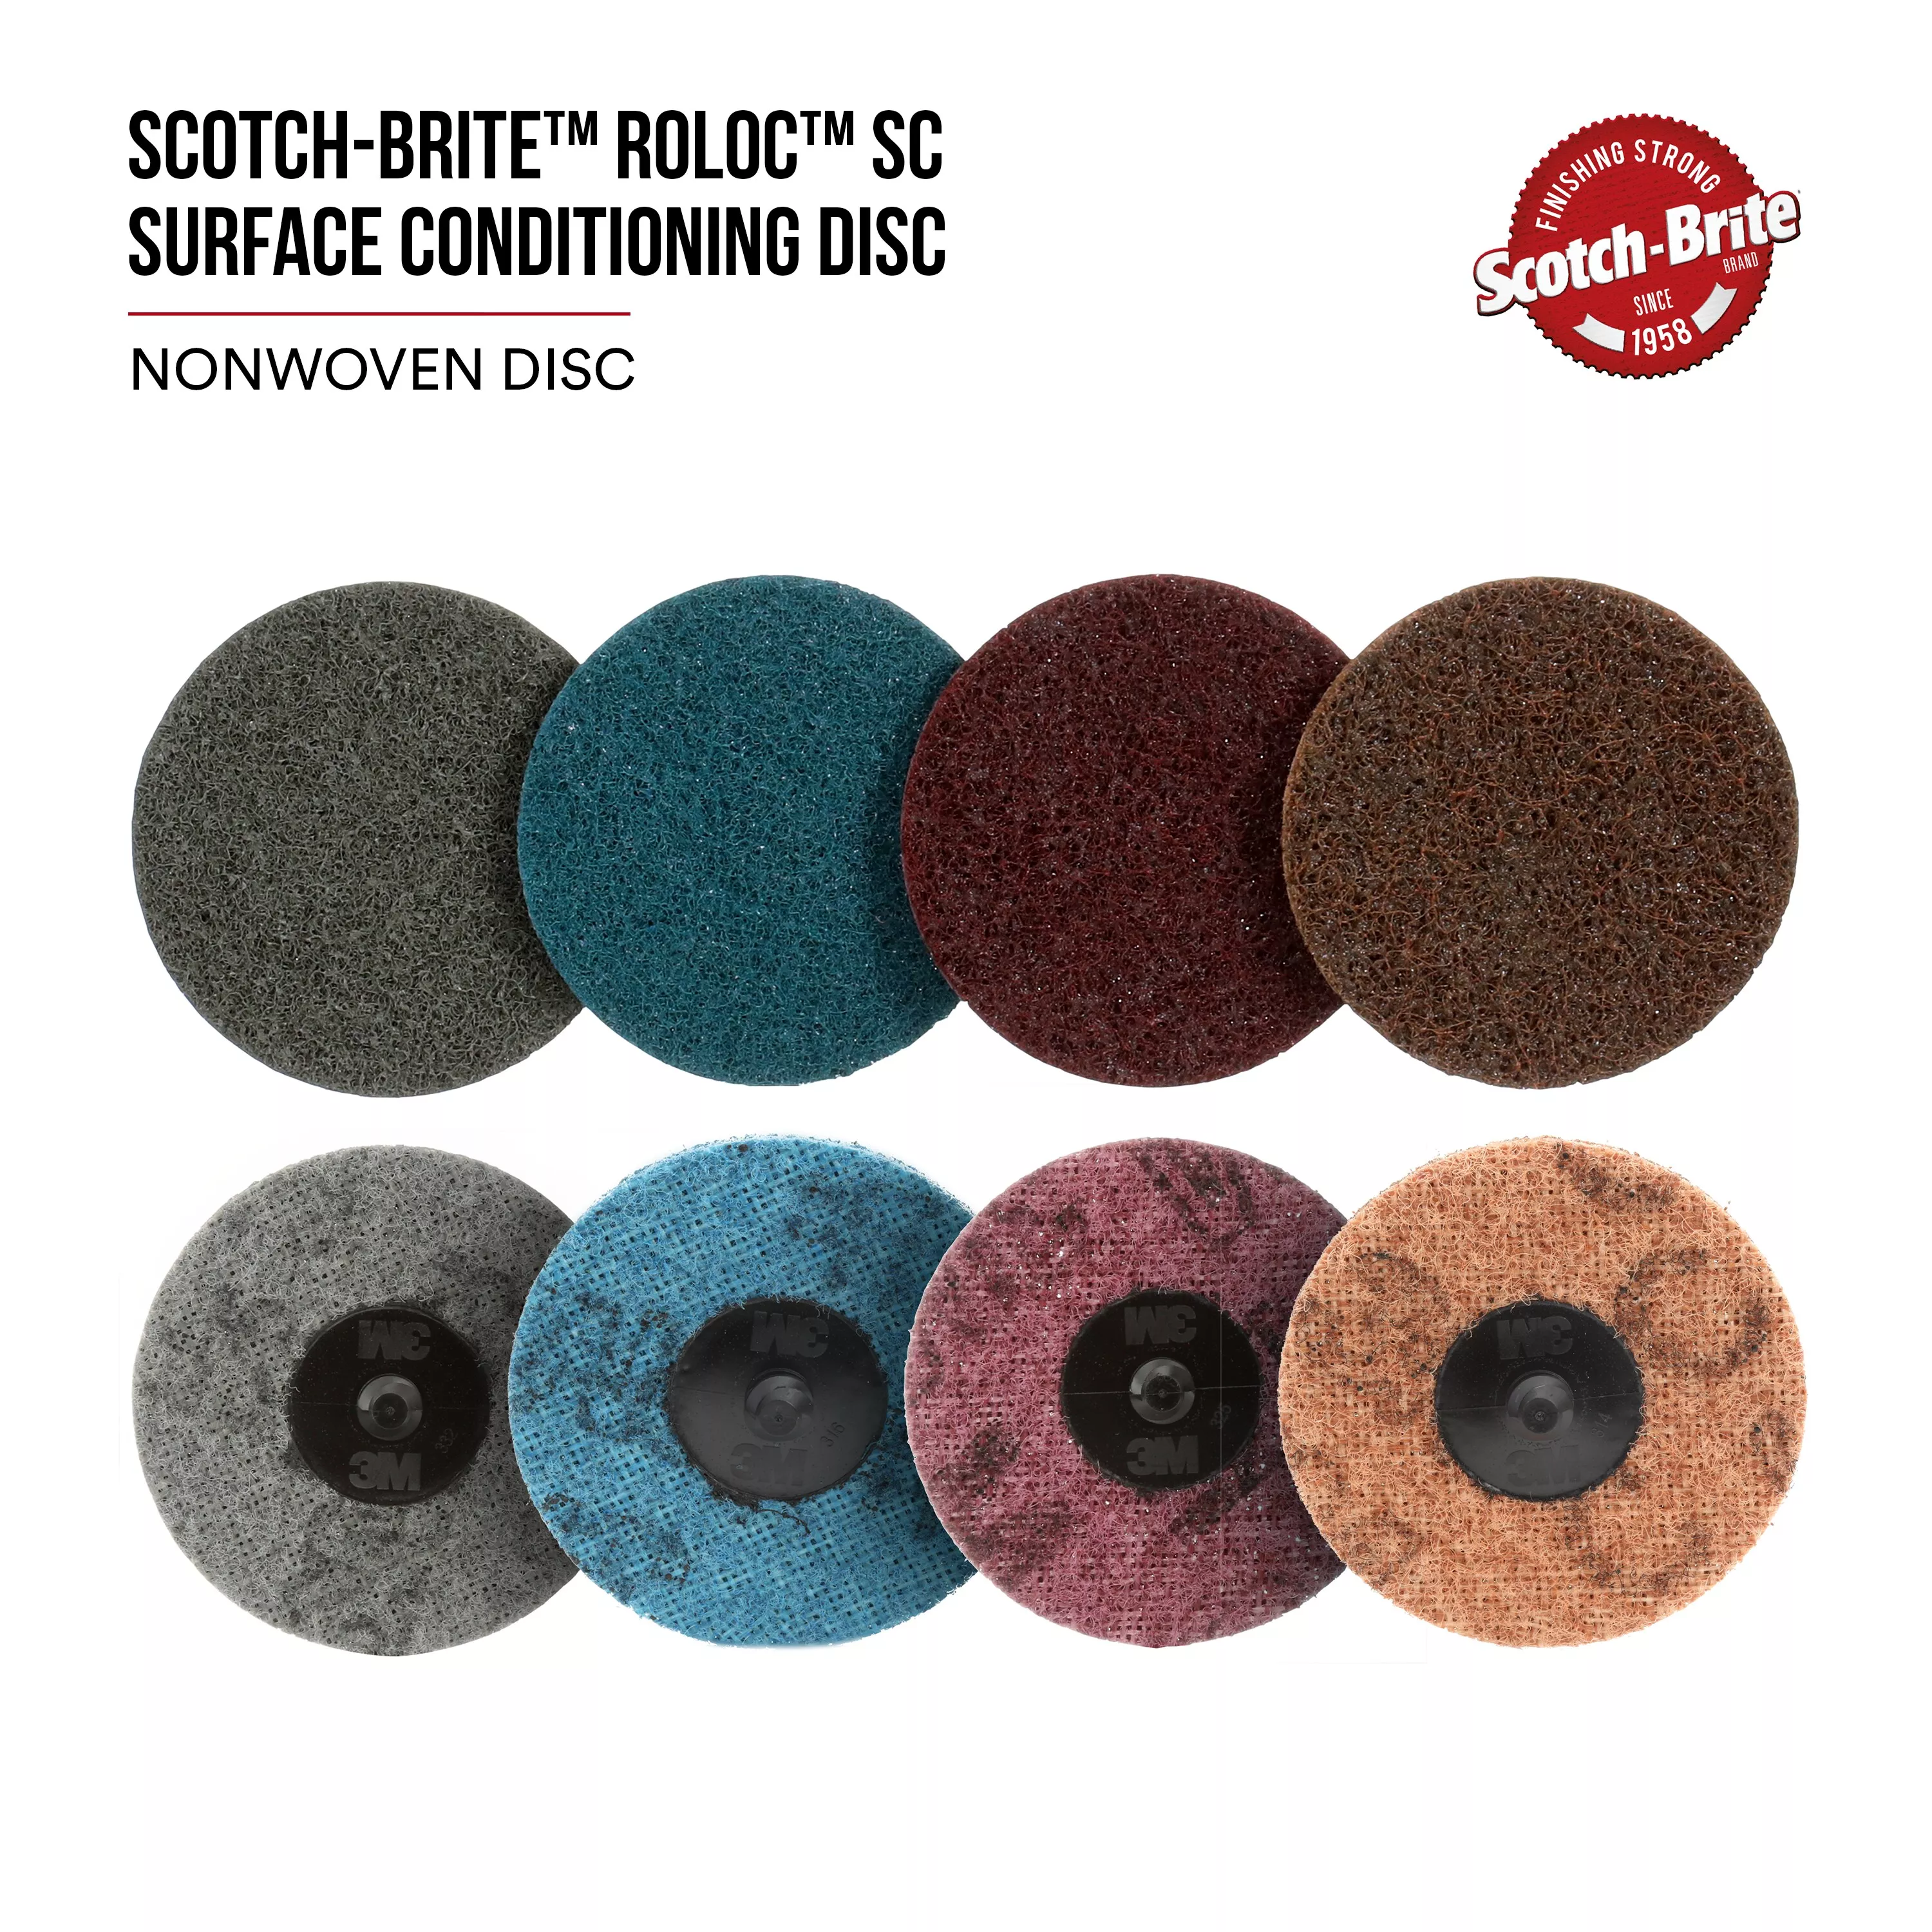 SKU 7000000753 | Scotch-Brite™ Roloc™ Surface Conditioning Disc